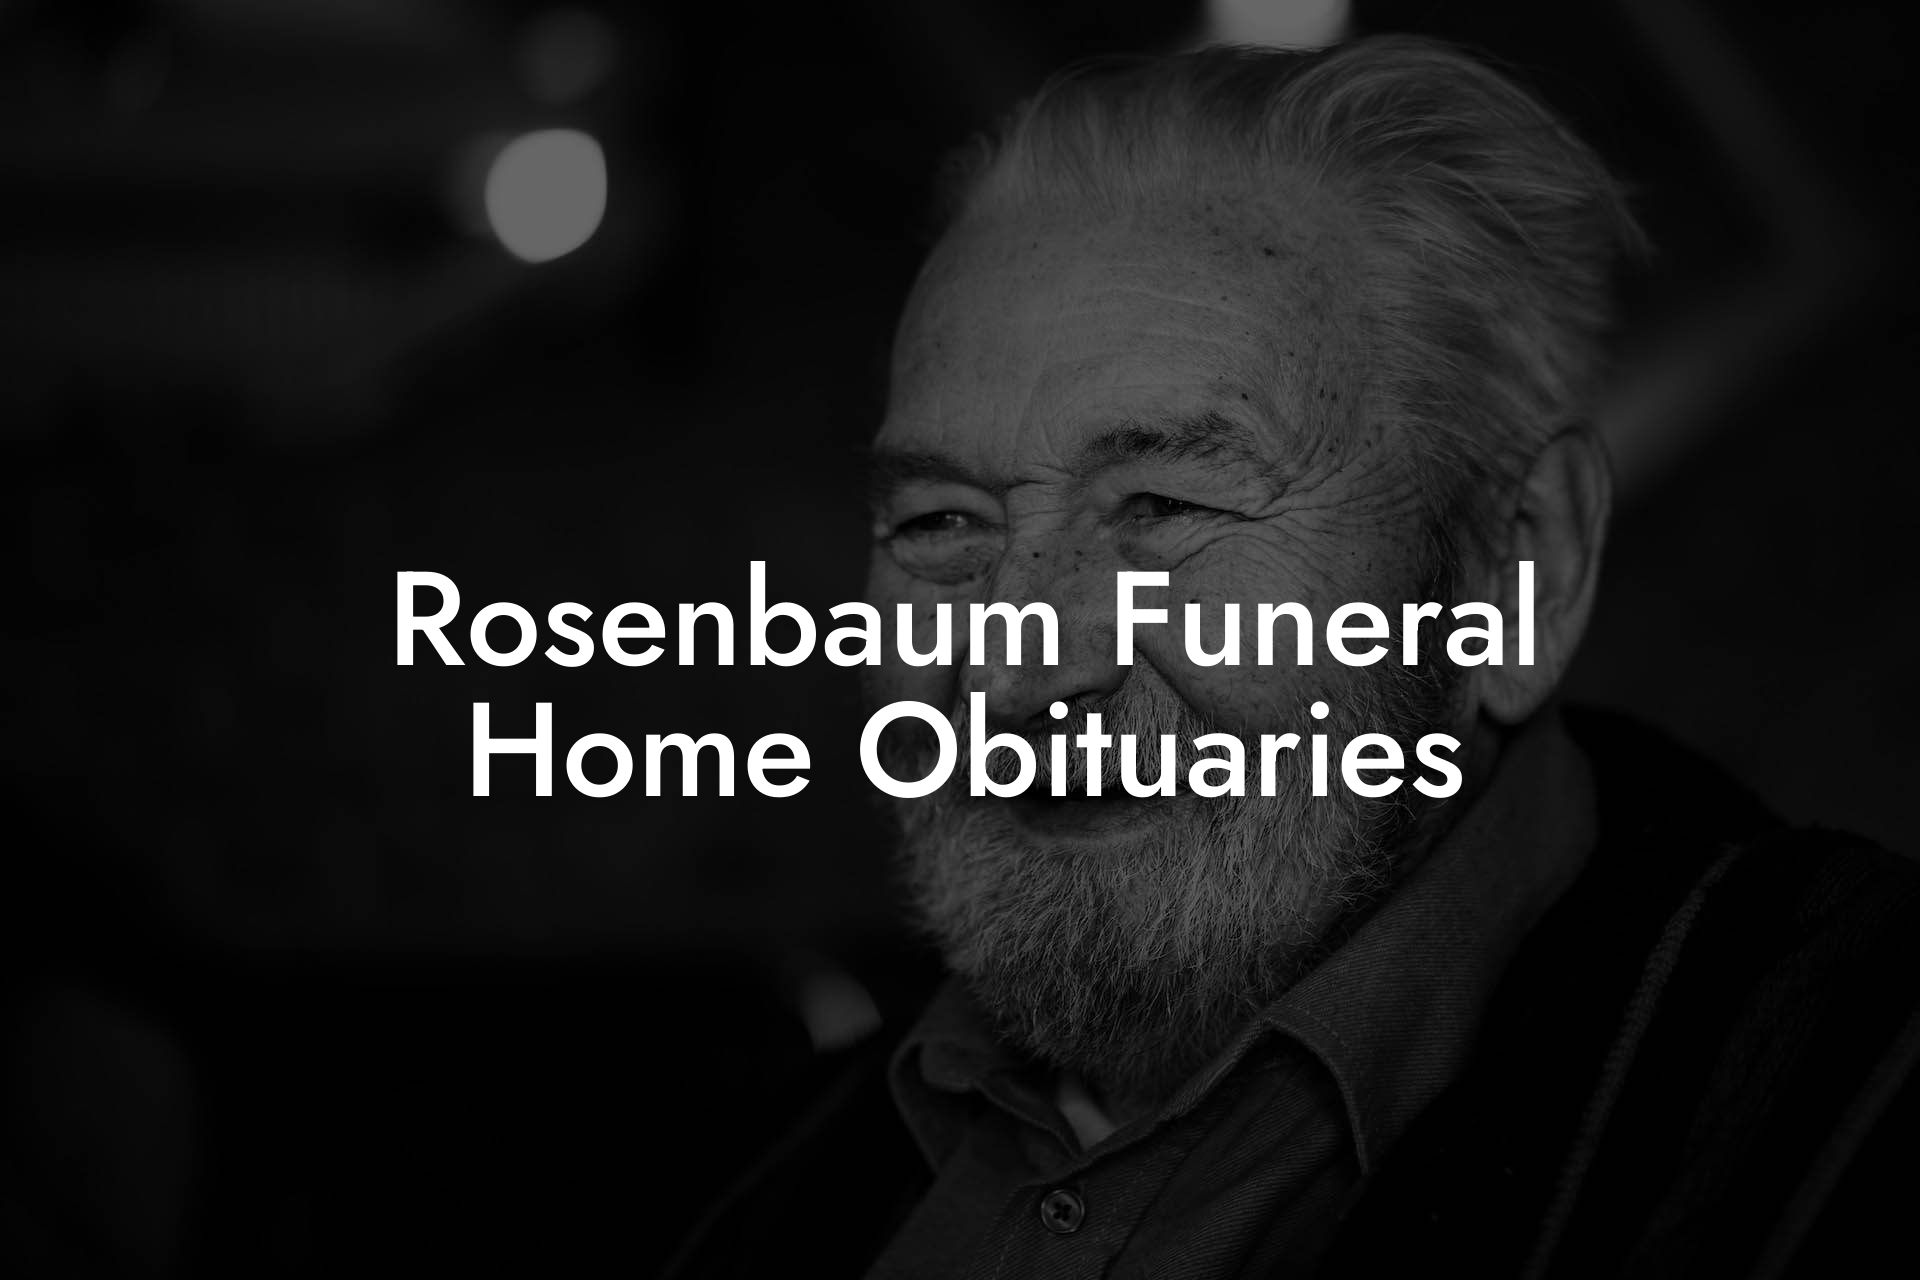 Rosenbaum Funeral Home Obituaries